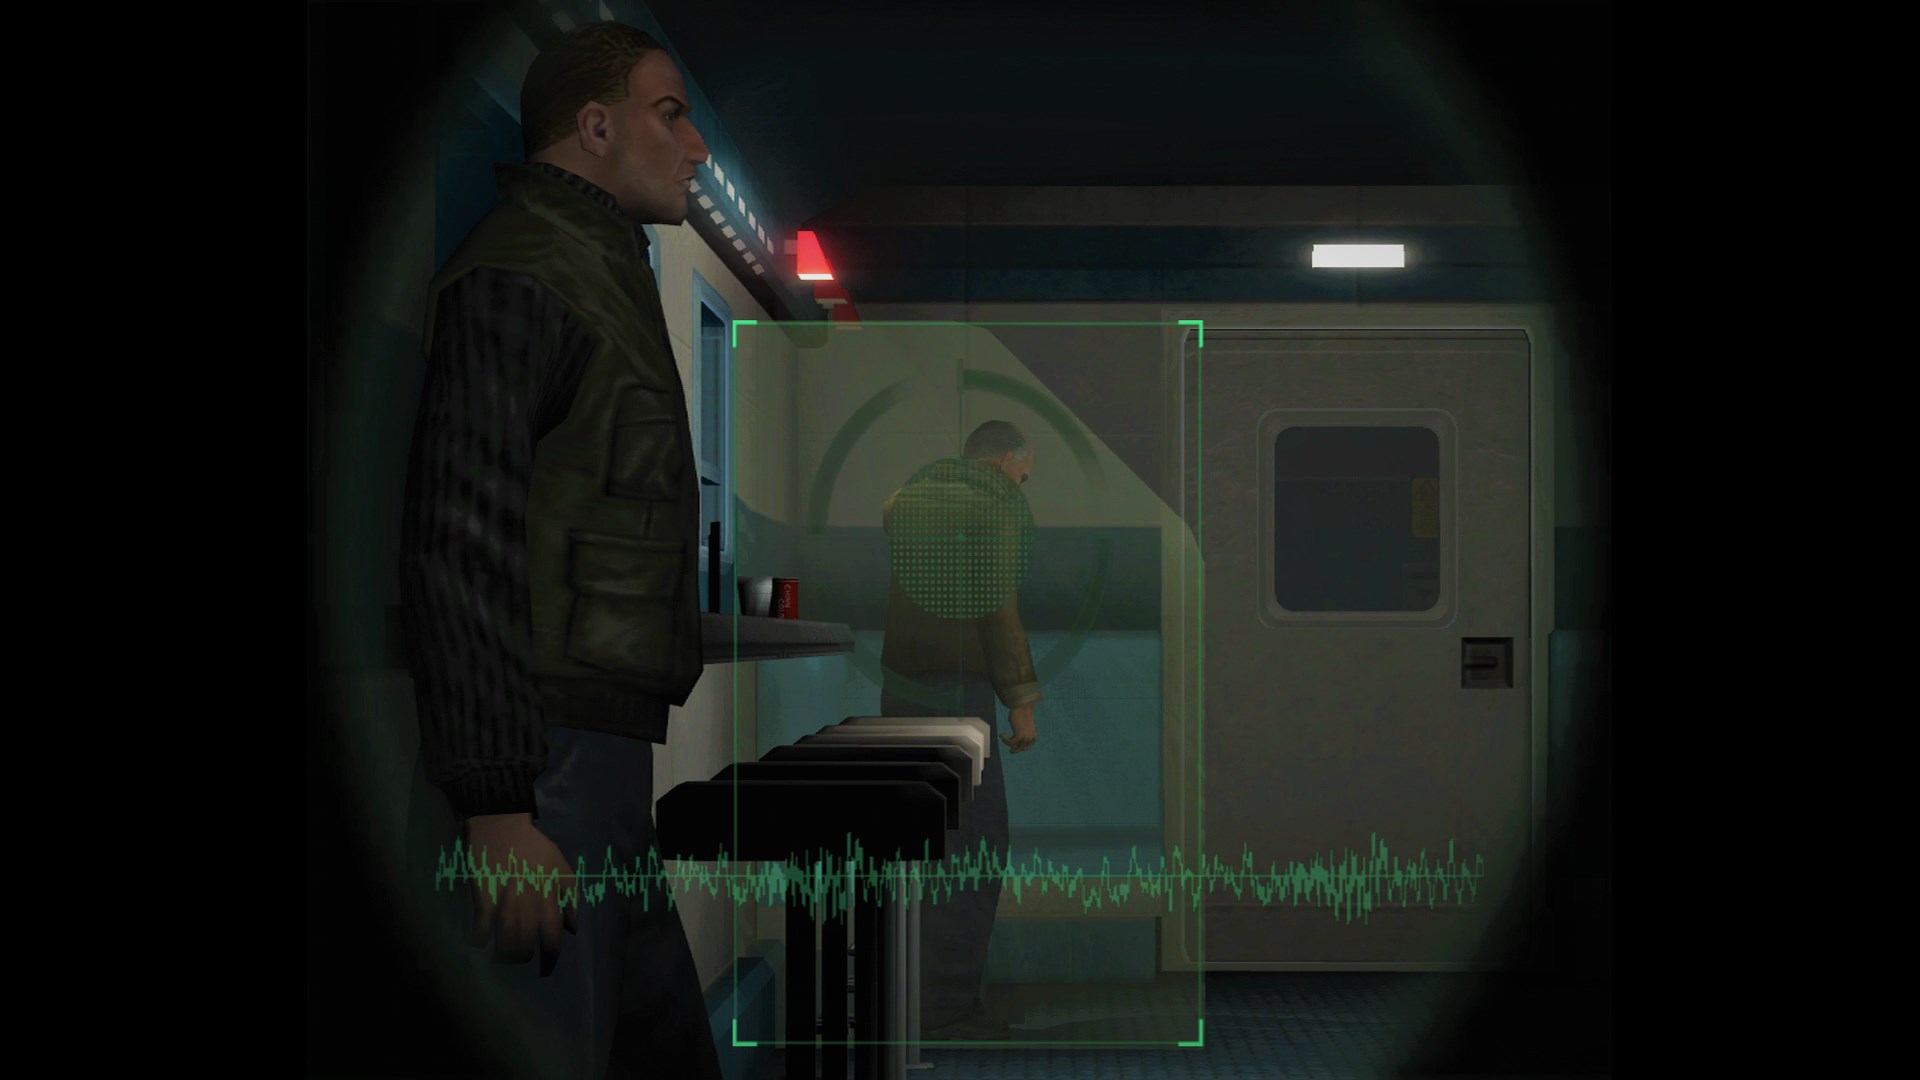 Tom Clancy's Splinter Cell: Pandora Tomorrow on XOne — price